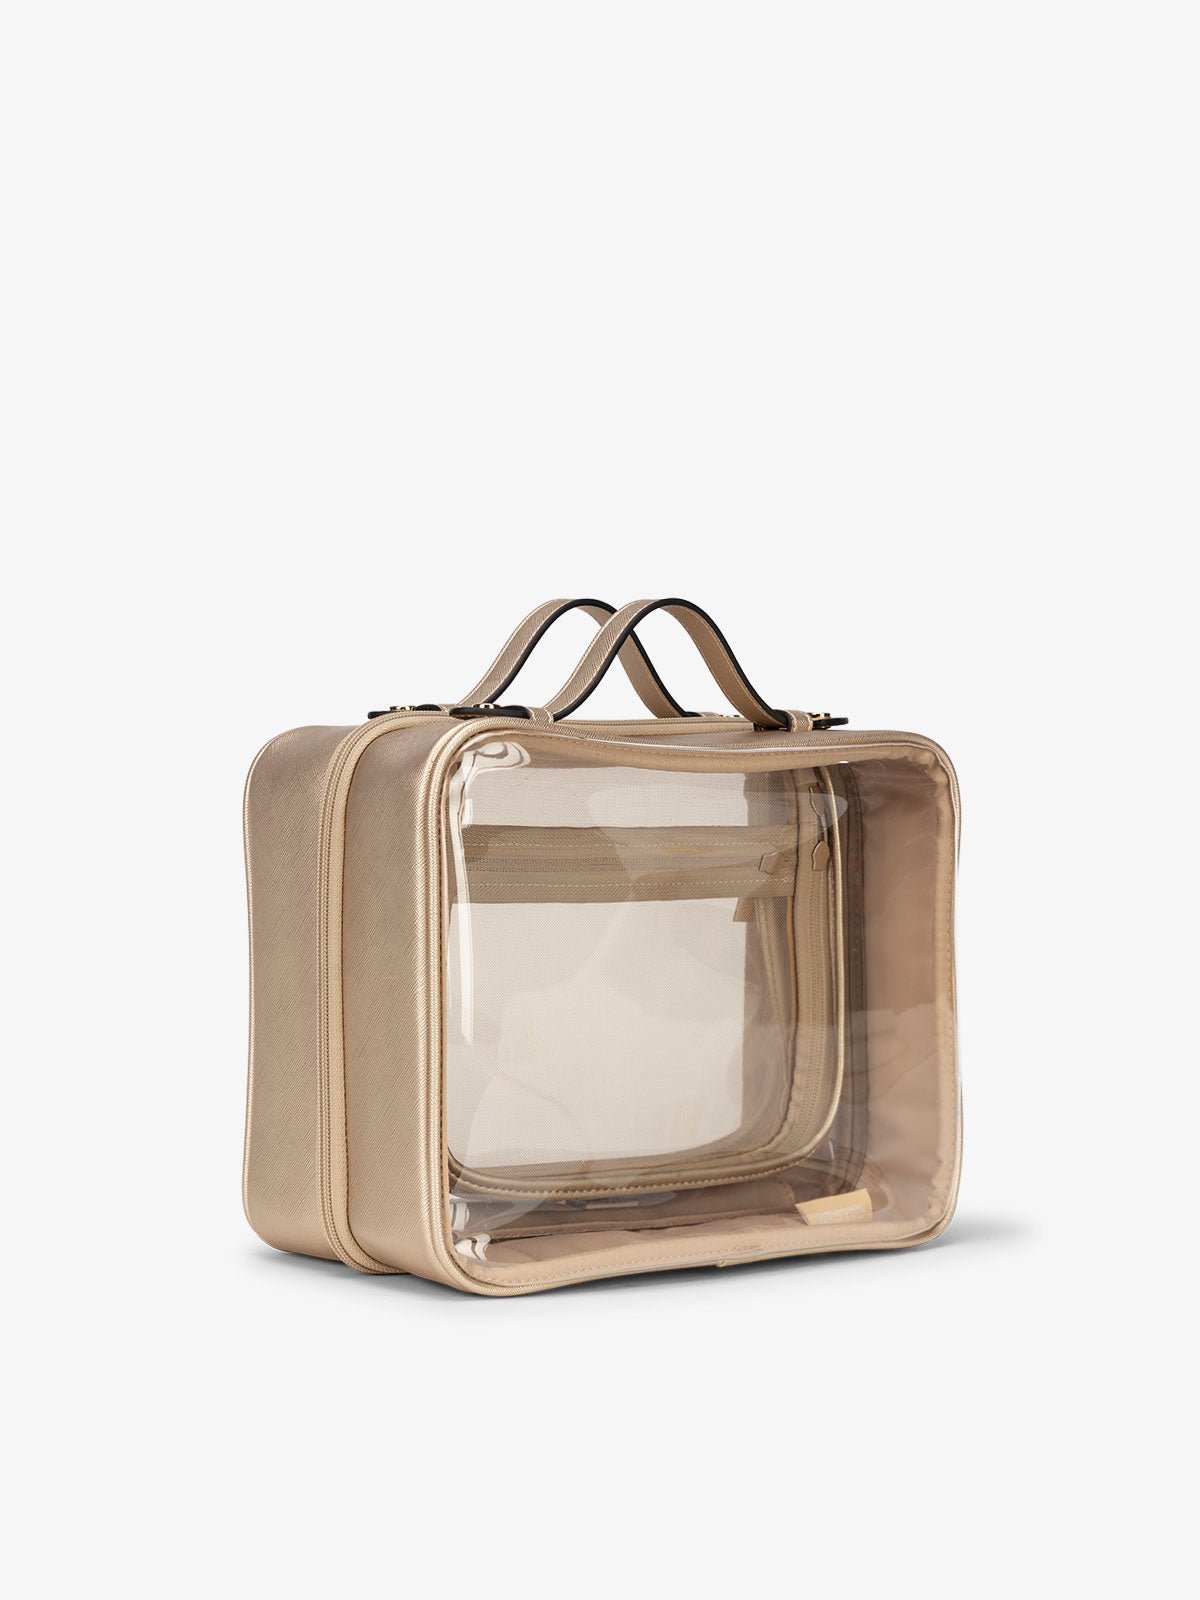 CALPAK clear makeup bag with top handles in gold